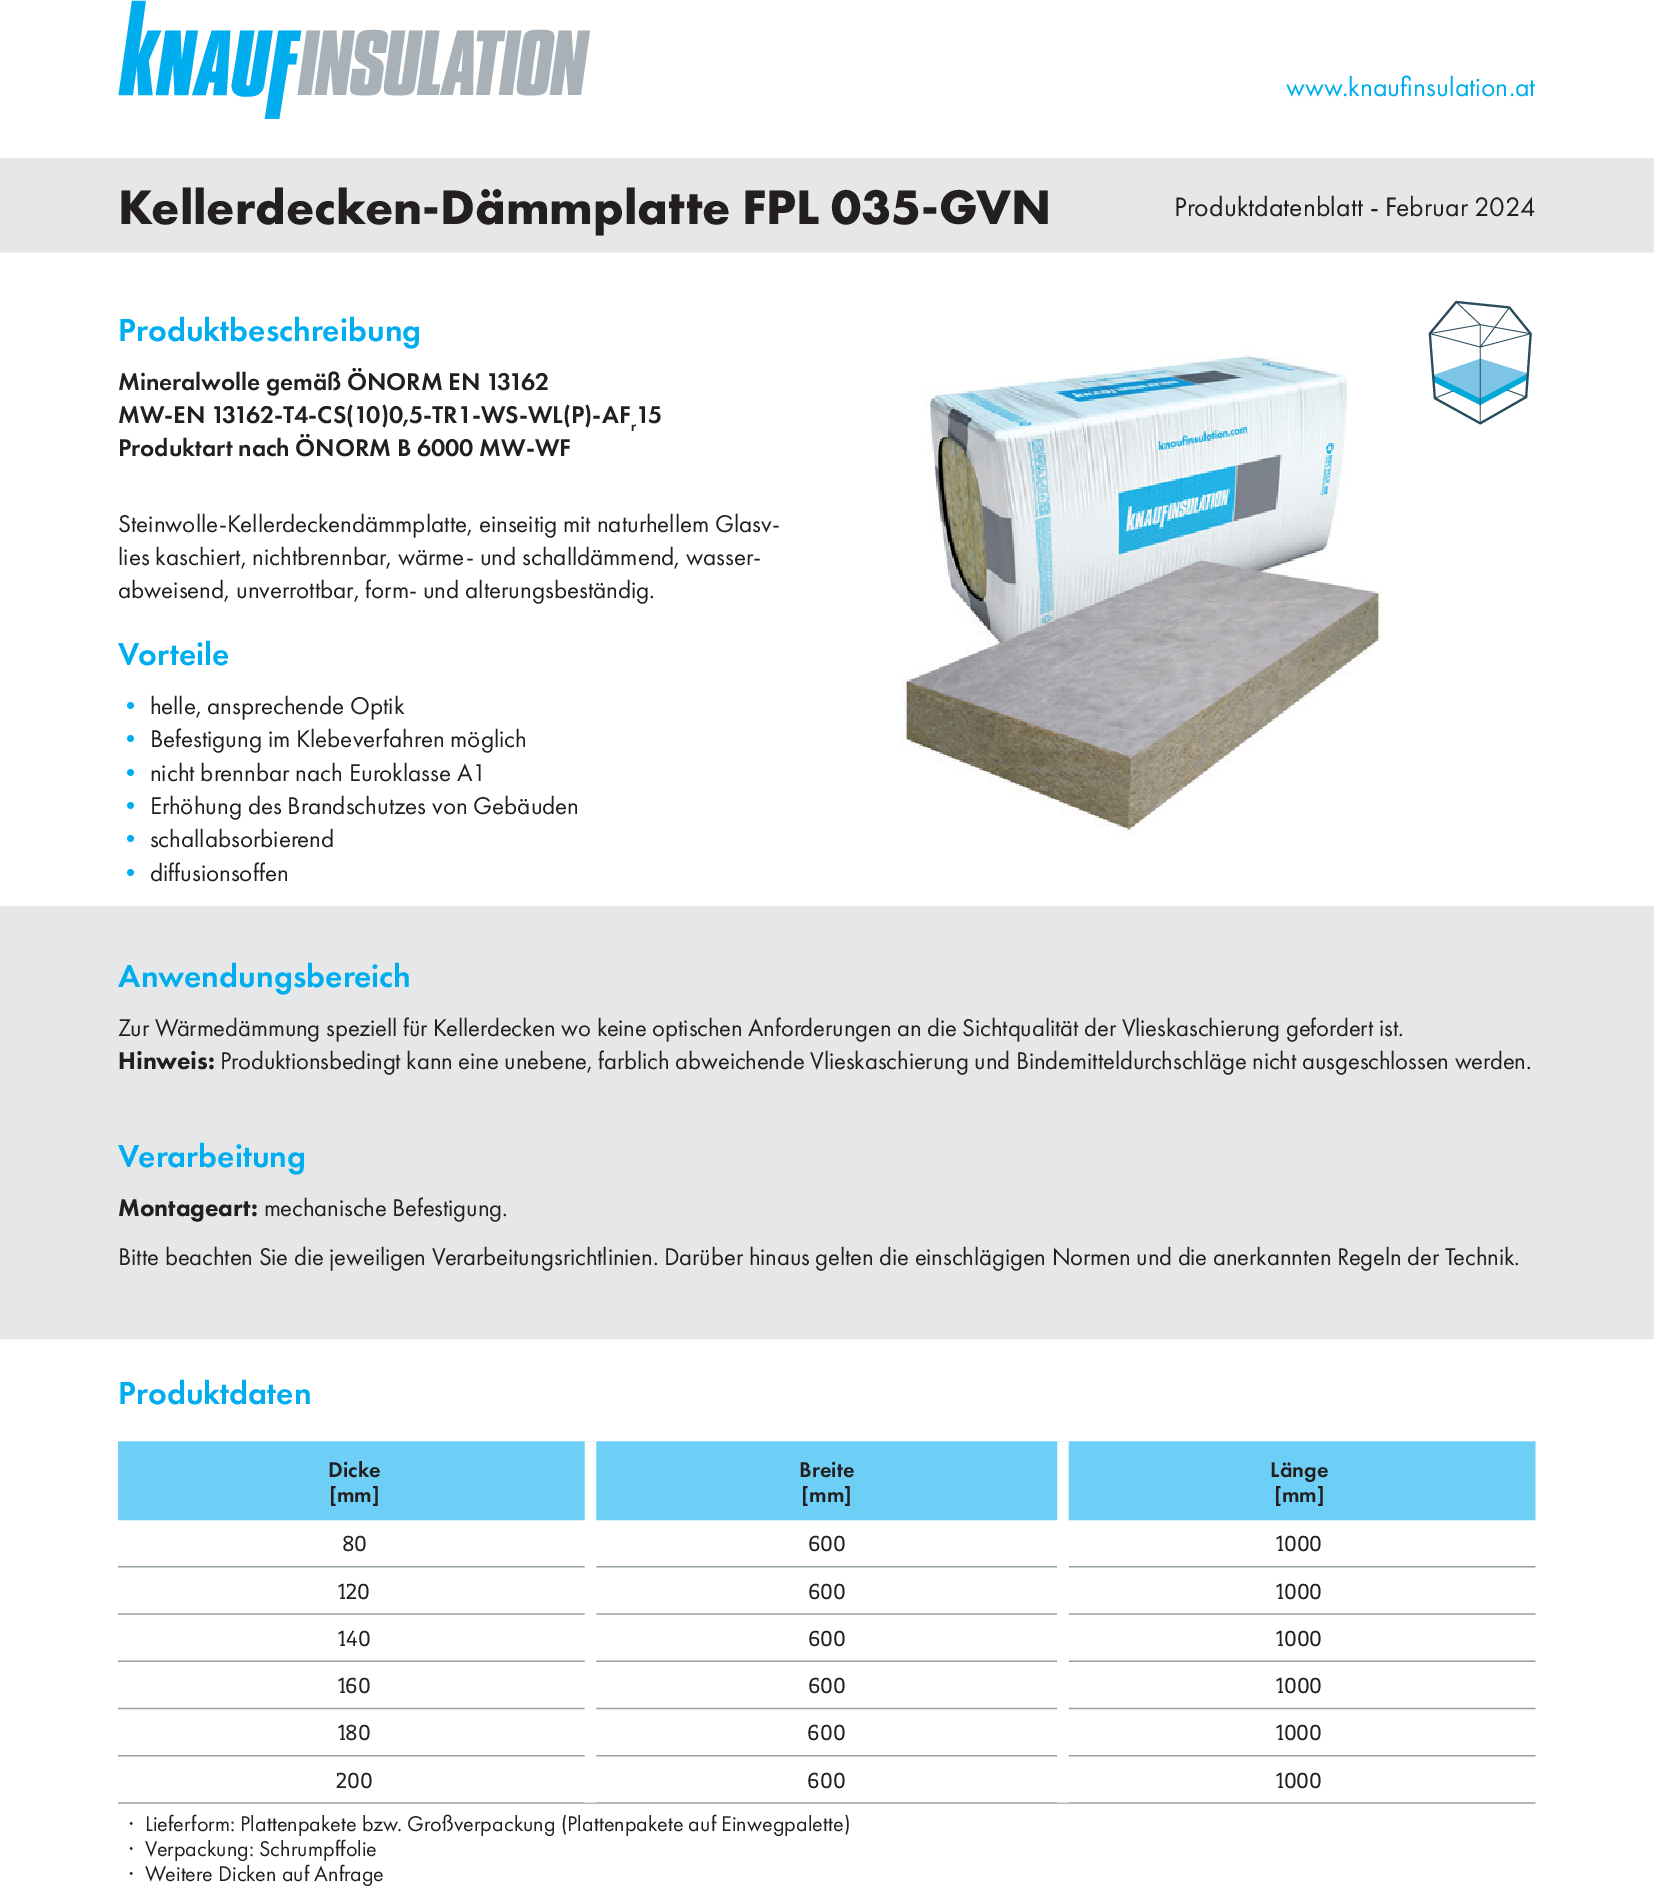 Kellerdecken-Dämmplatte FPL 035-GVN, Produktdatenblatt